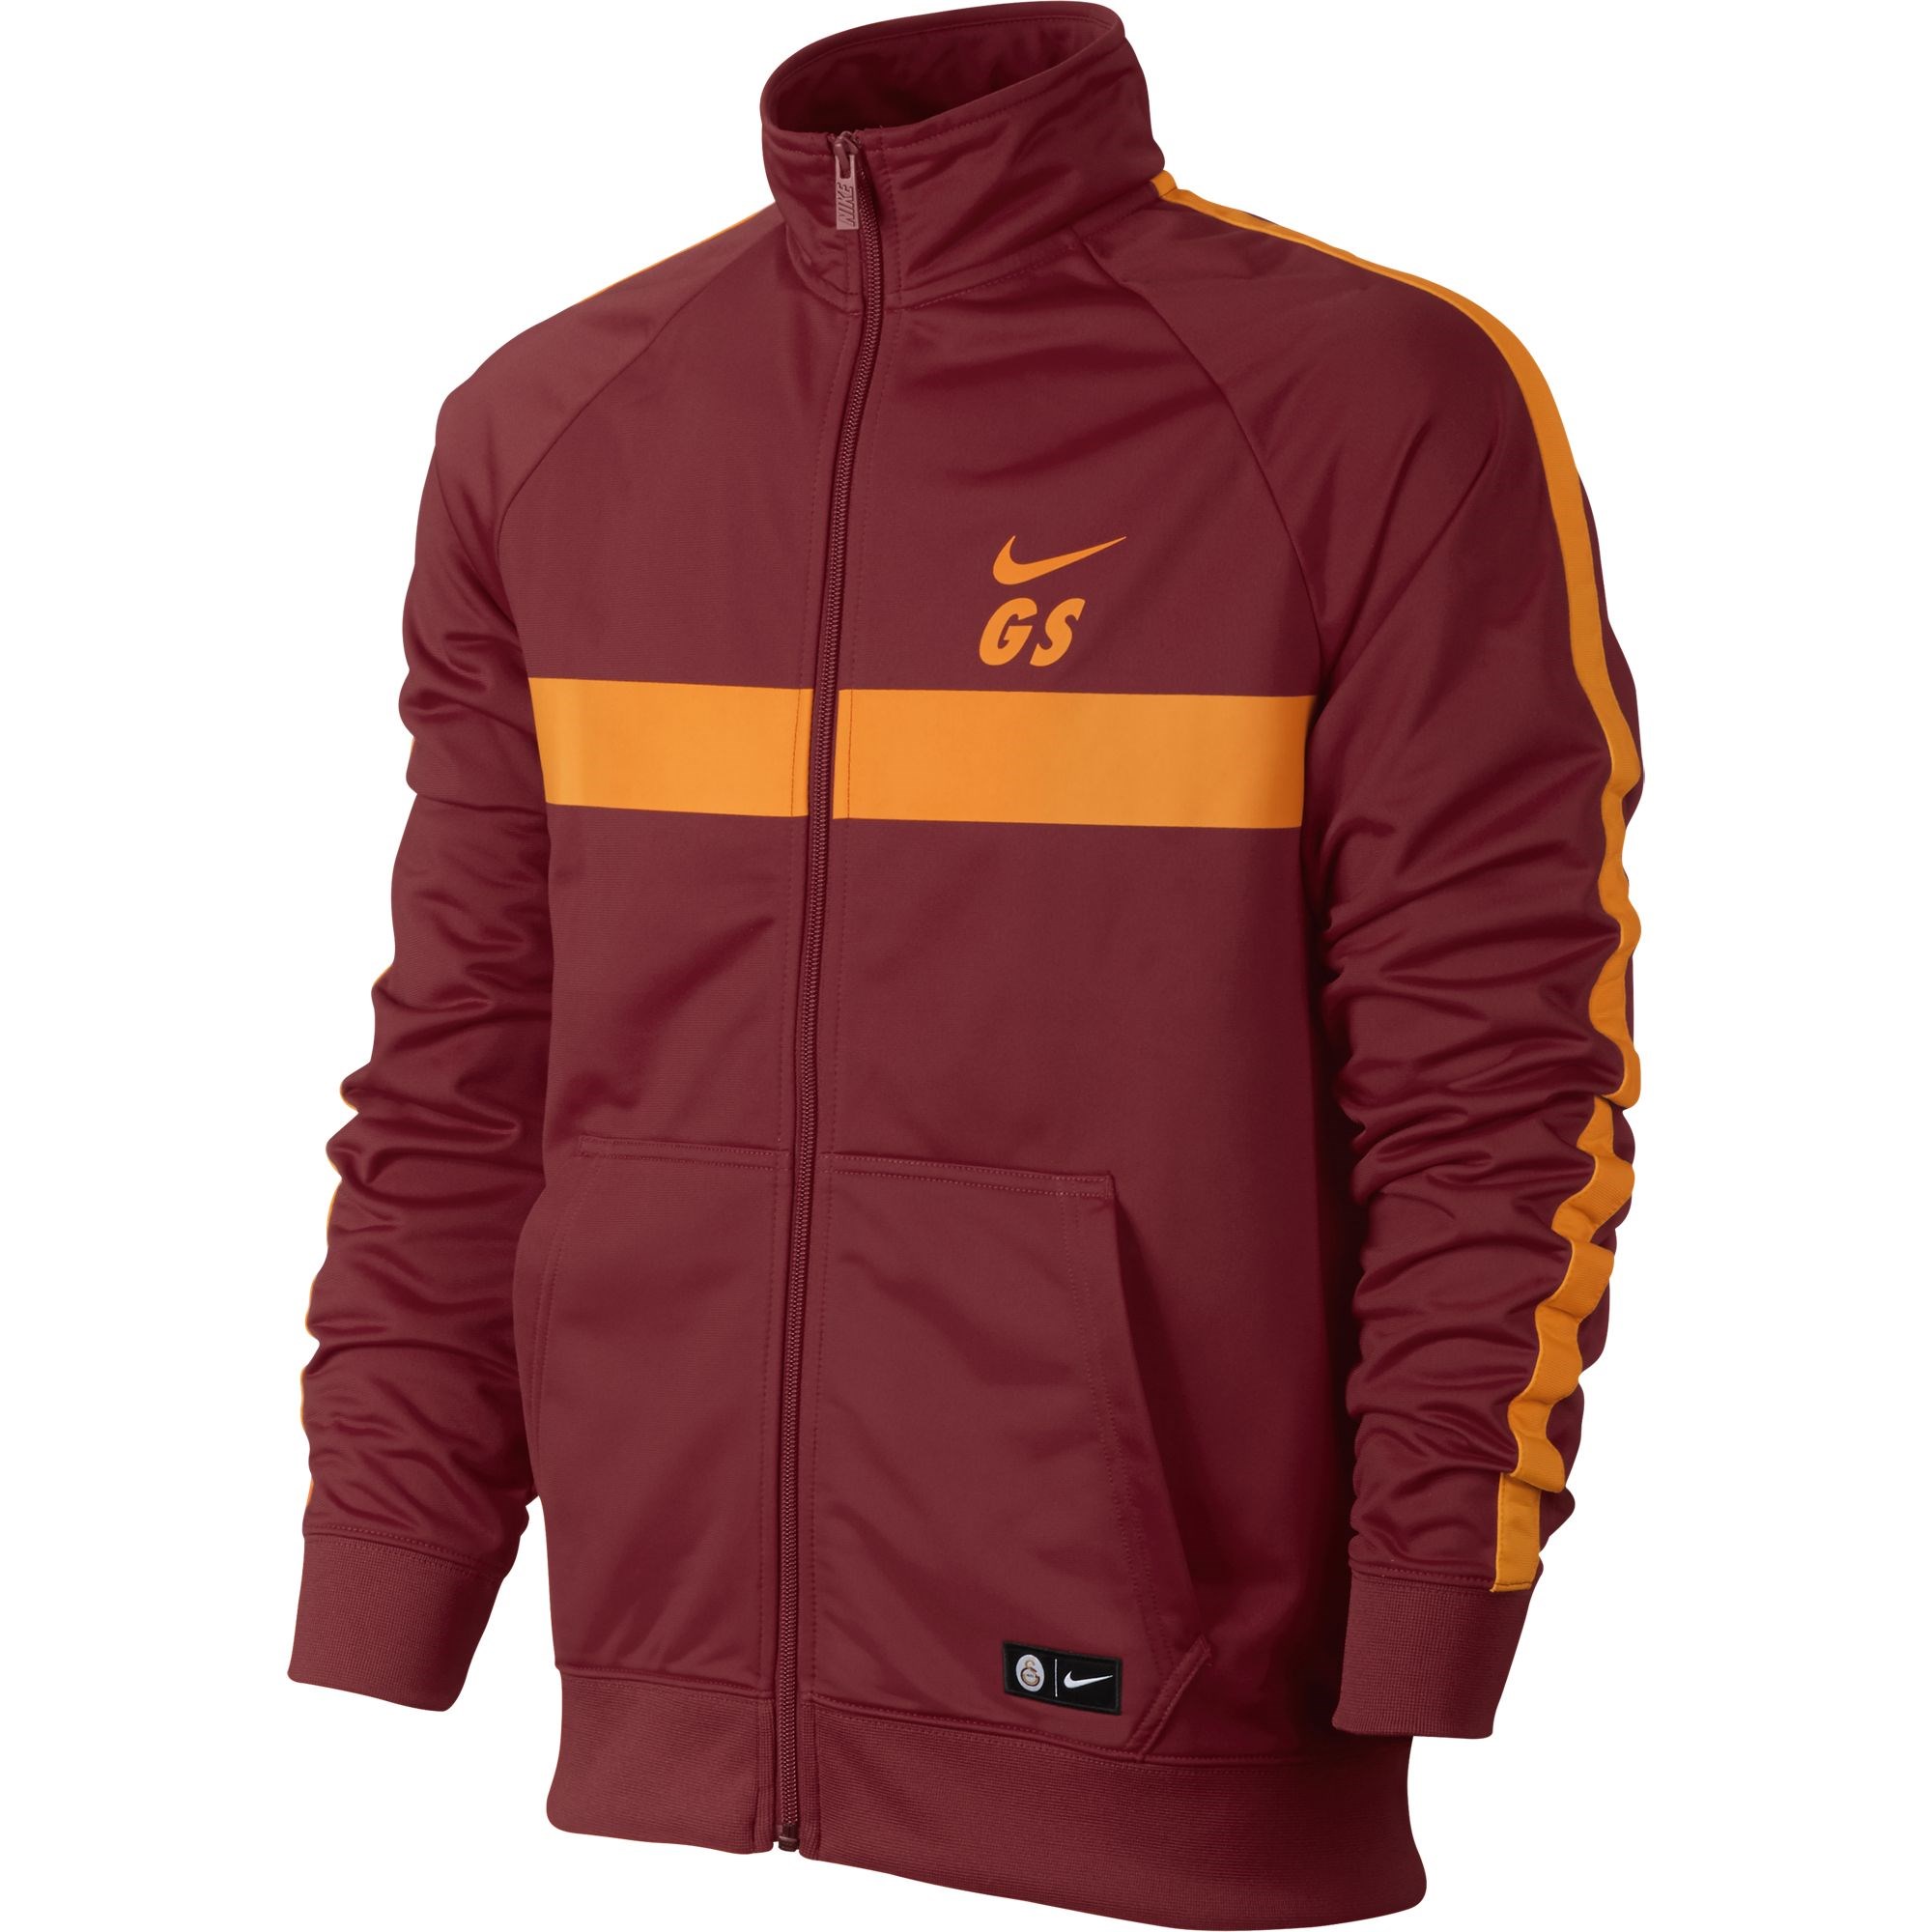 Nike Galatasaray M Nsw Jkt Pk Cre Erkek Sweatshirt Ürün kodu :810253-628 |  Etichet Sport